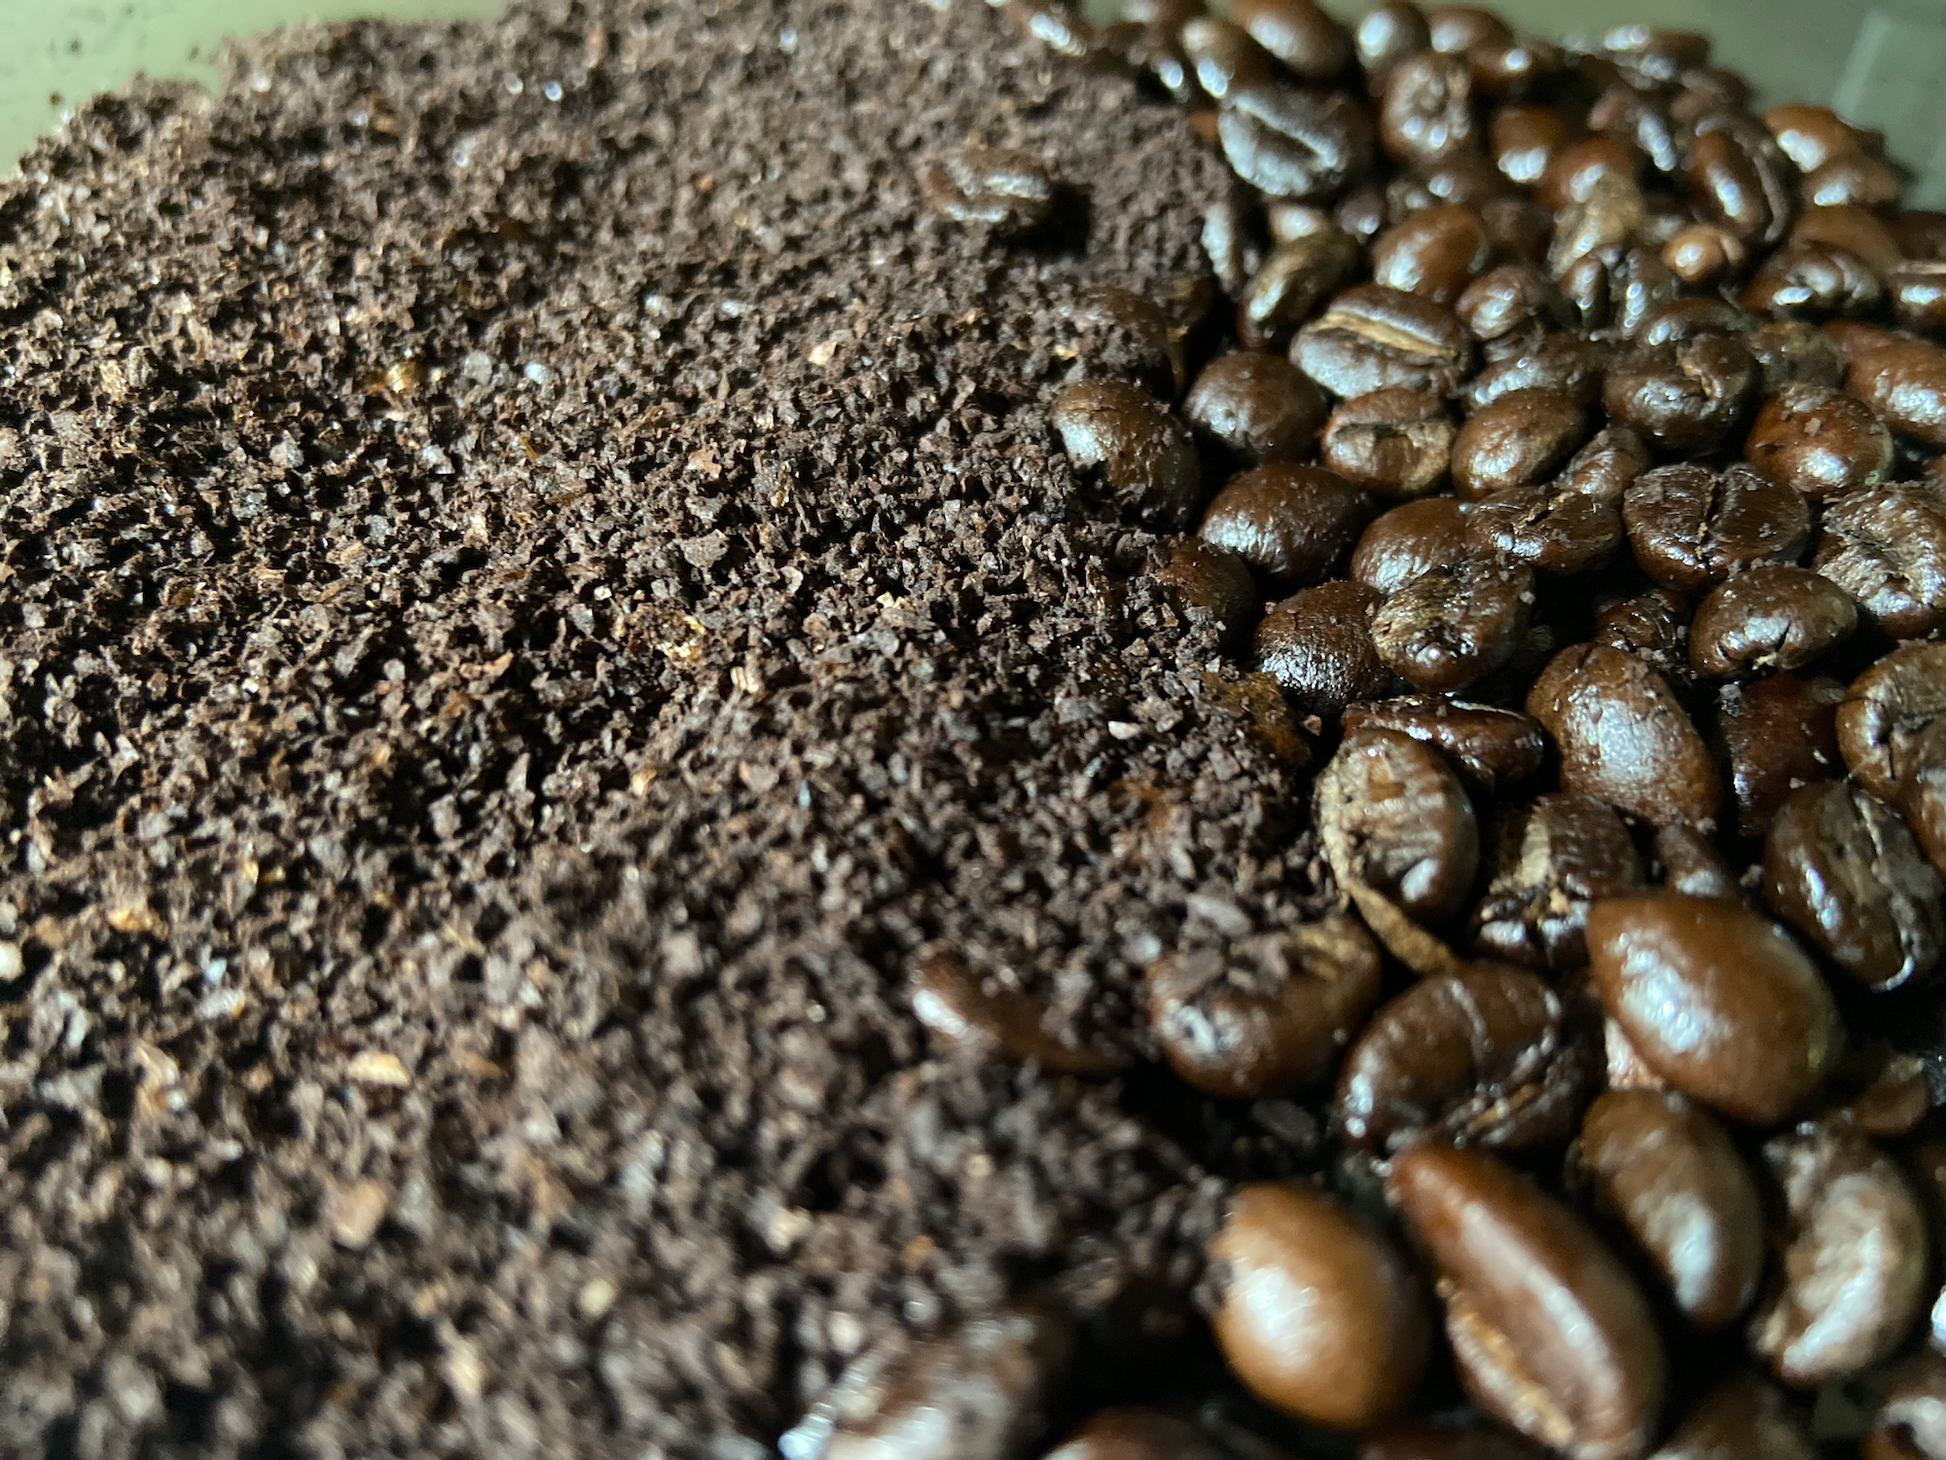 steel oak brews blend coffee dominican costa rican colombian vietnamese robusta rwanda